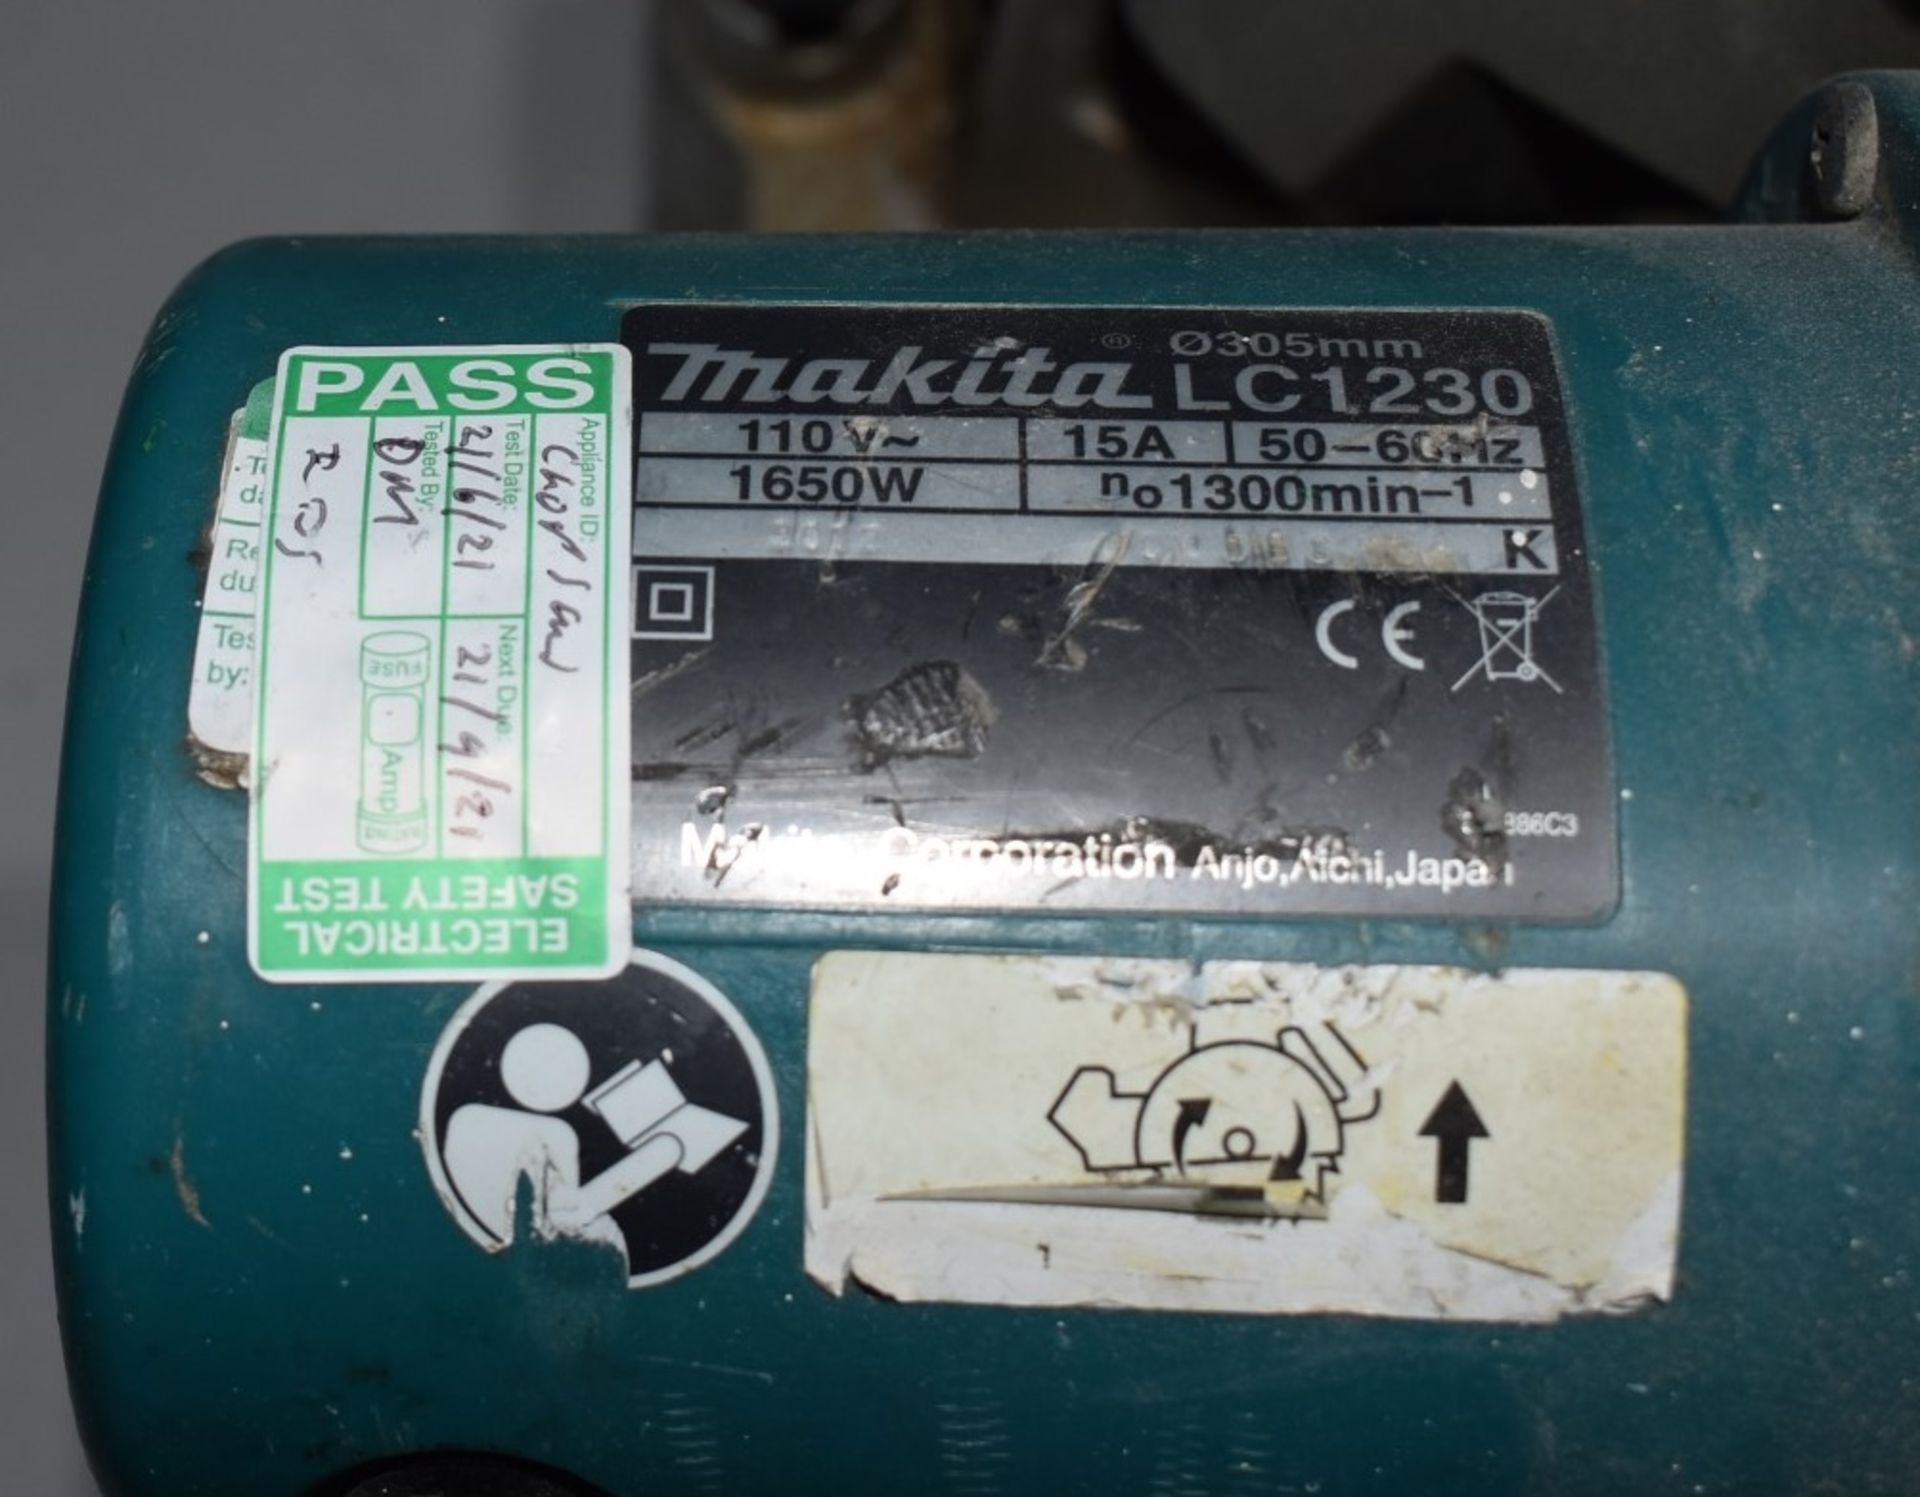 1 x MAKITA LC1230 TCT 305mm Cut Off Saw - Original RRP £389.00 - Ref: DS7526 ALT - CL816 - Location: - Image 2 of 4